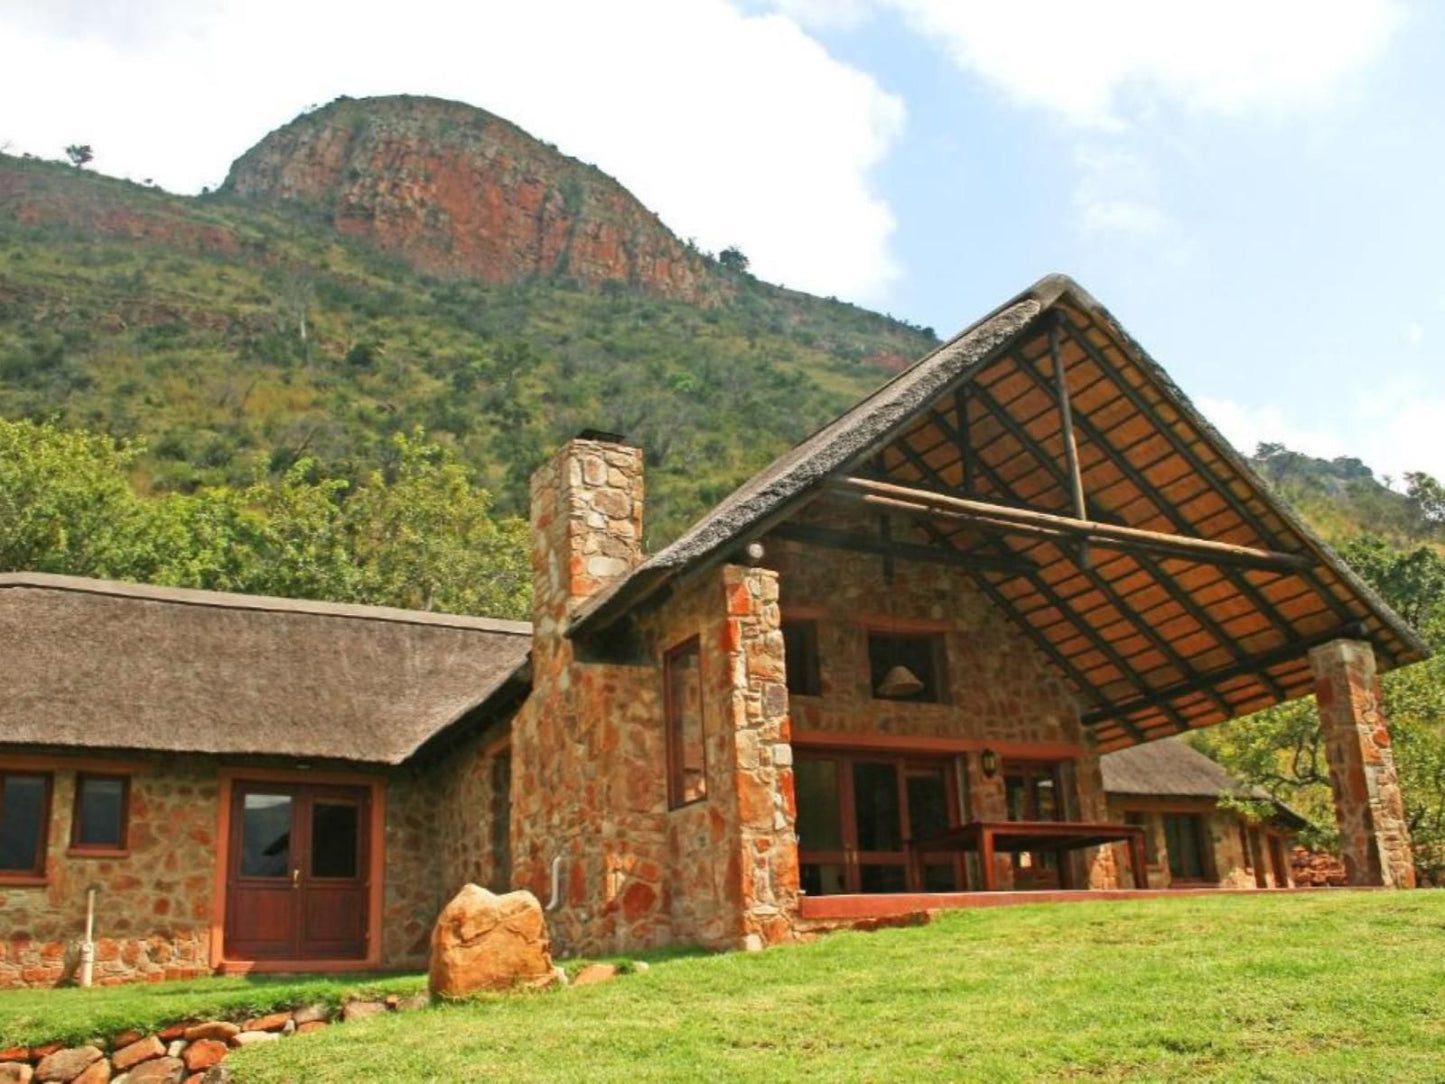 Verlorenkloof Wilgekraal Lydenburg Mpumalanga South Africa Building, Architecture, Cabin, Mountain, Nature, Highland